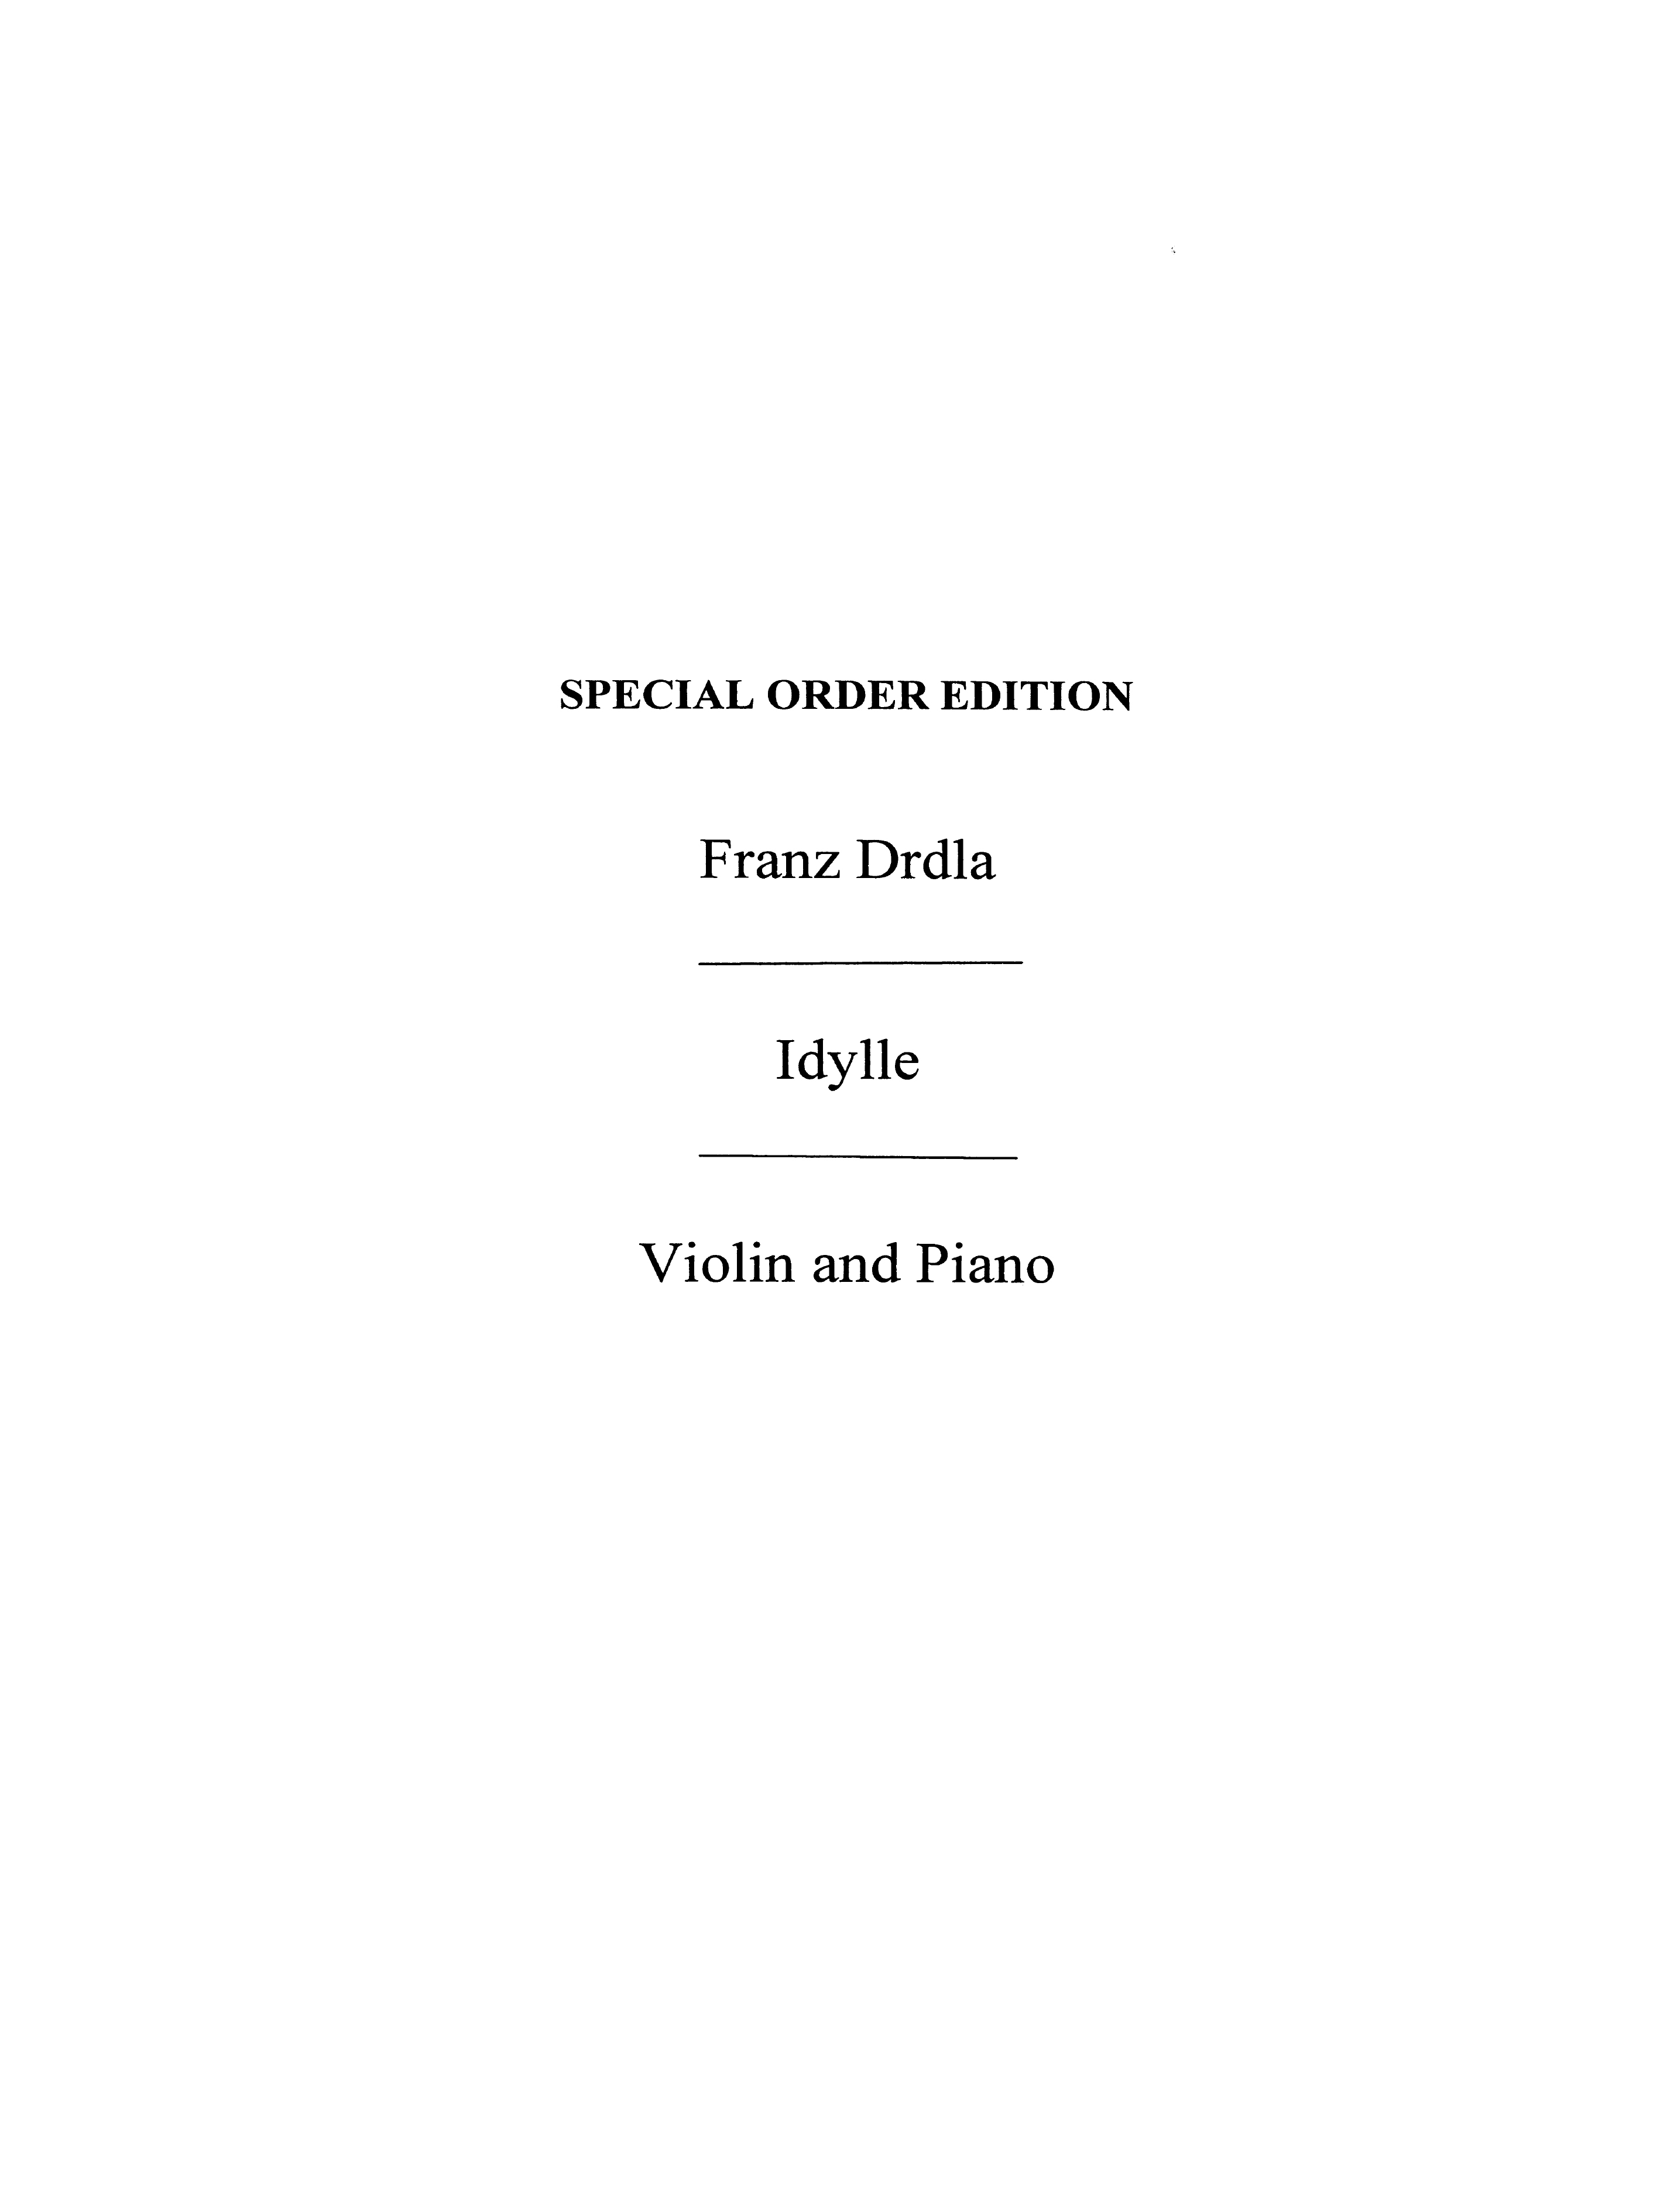 Franz Drdla: Idyll For Violin And Piano Op.37 No.1: Violin: Instrumental Work